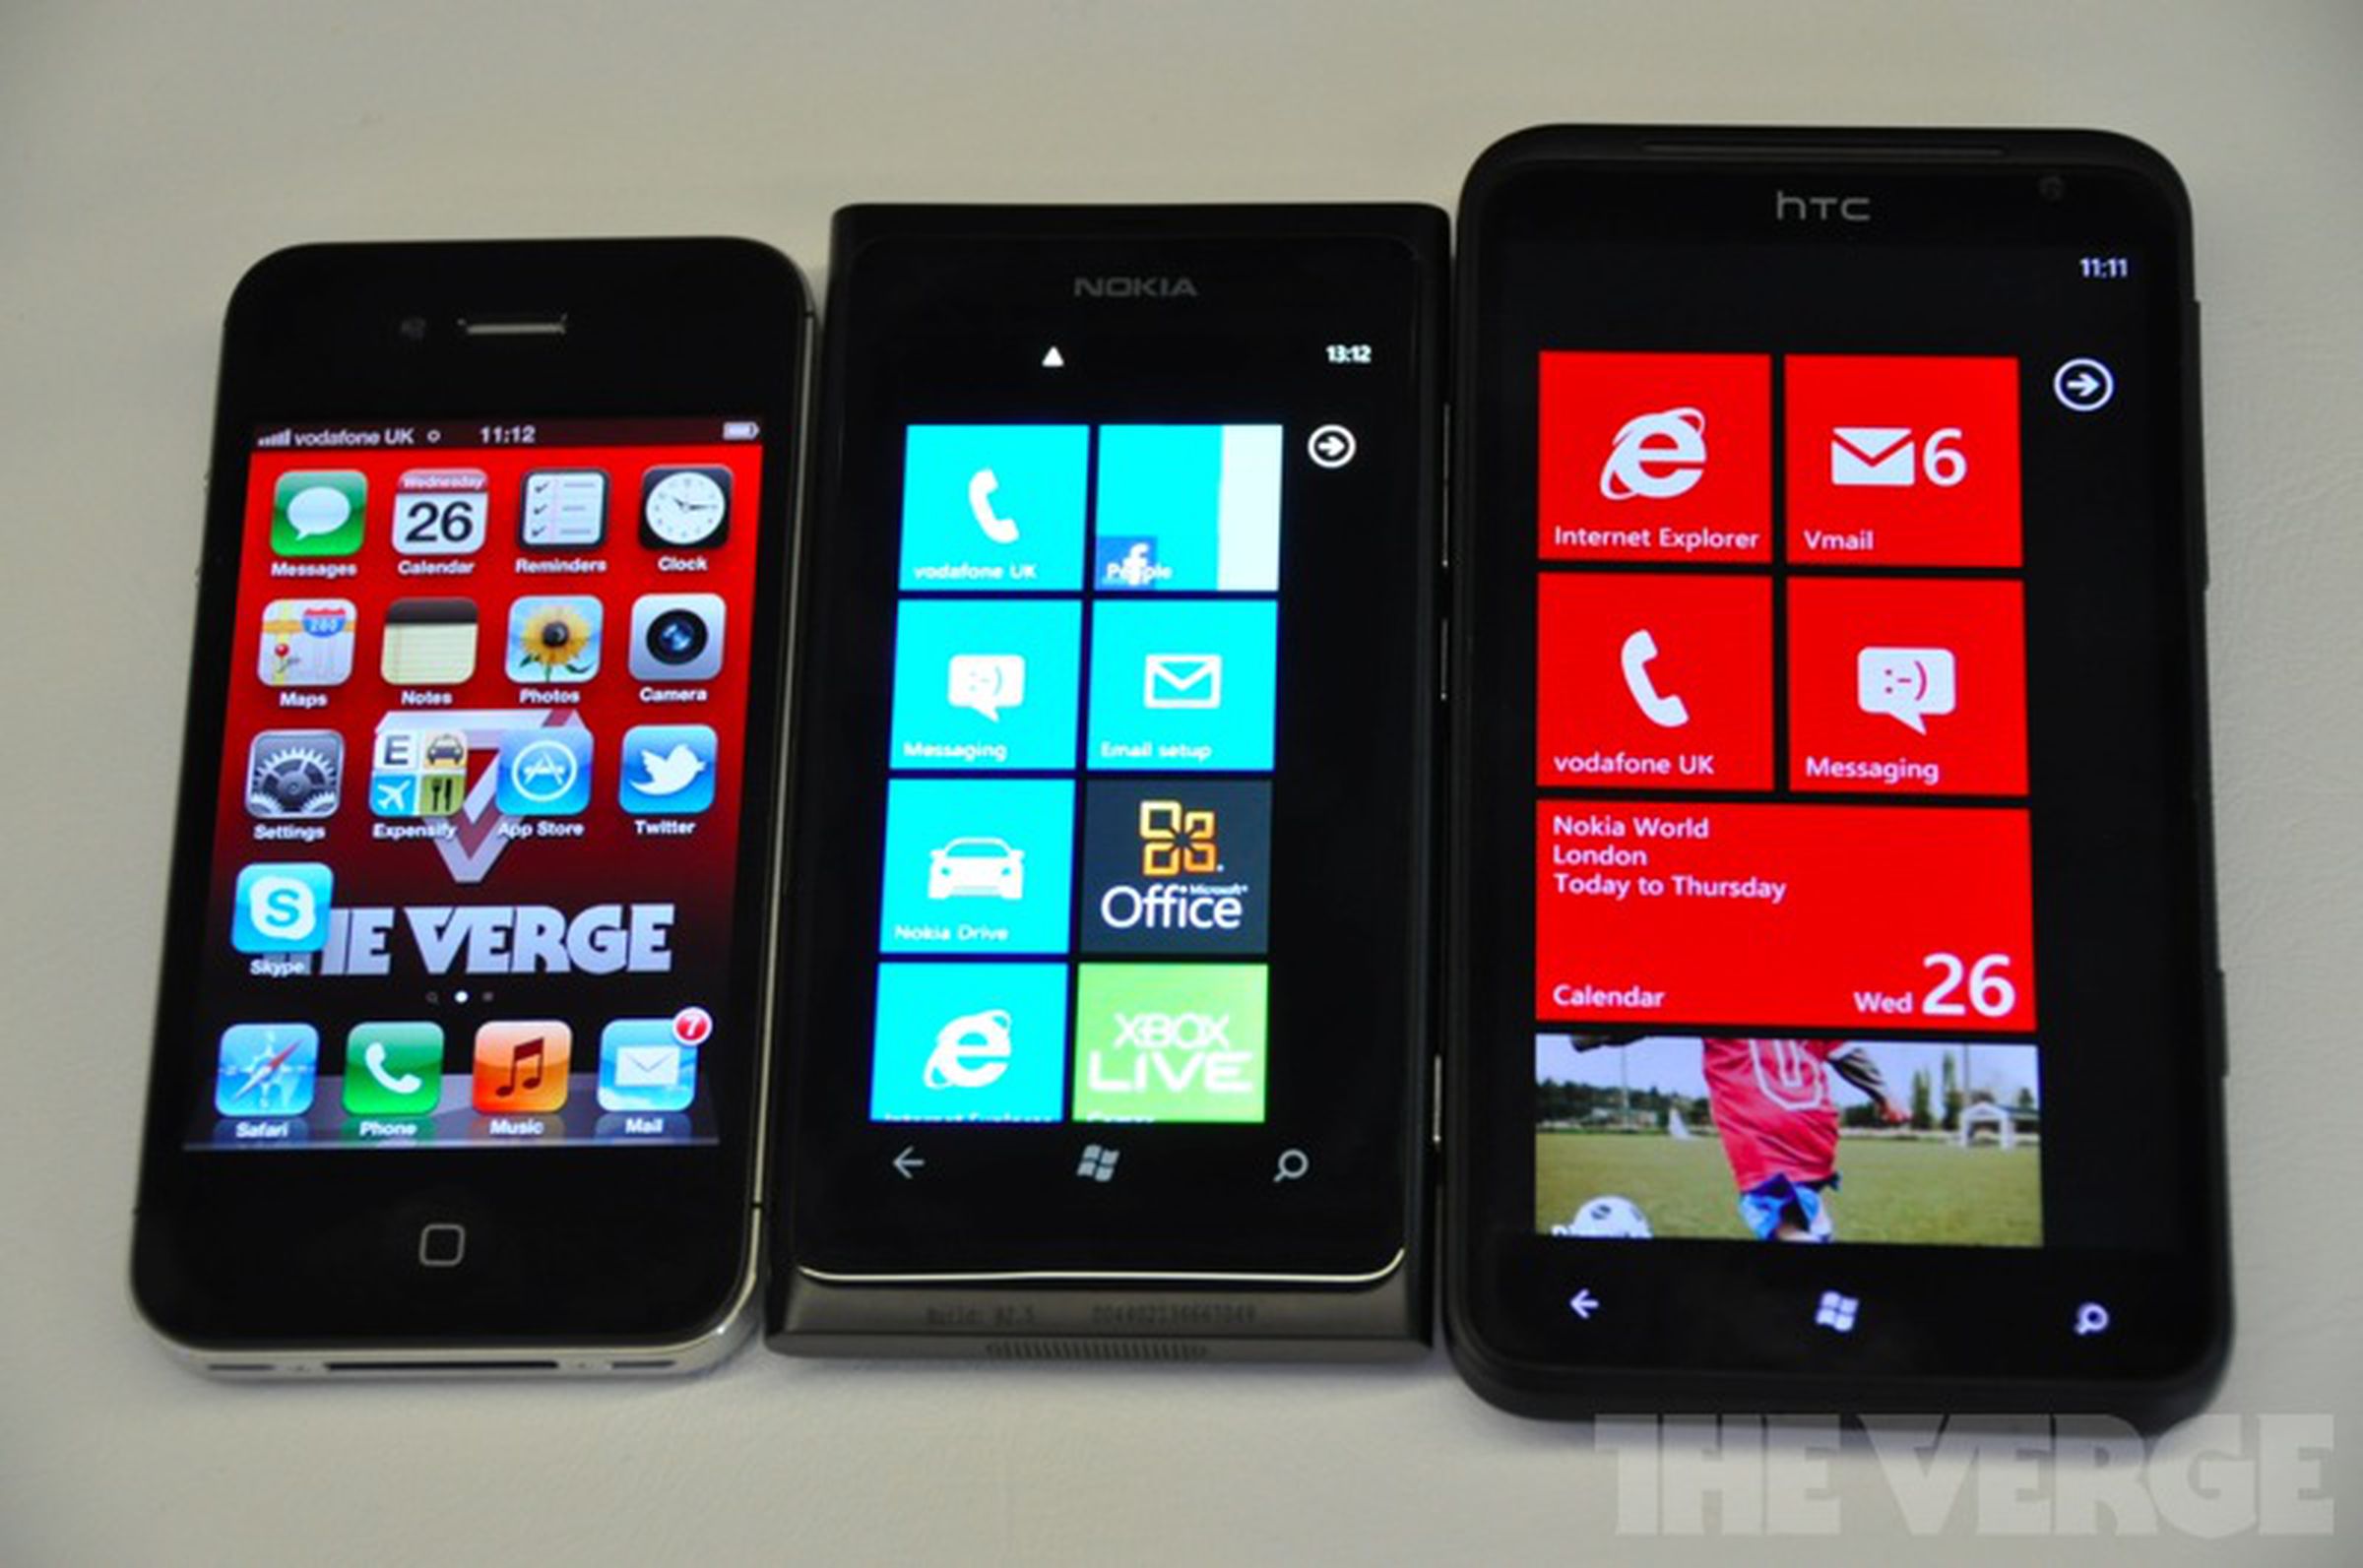 Nokia Lumia 800 vs iPhone 4S and HTC Titan photo gallery